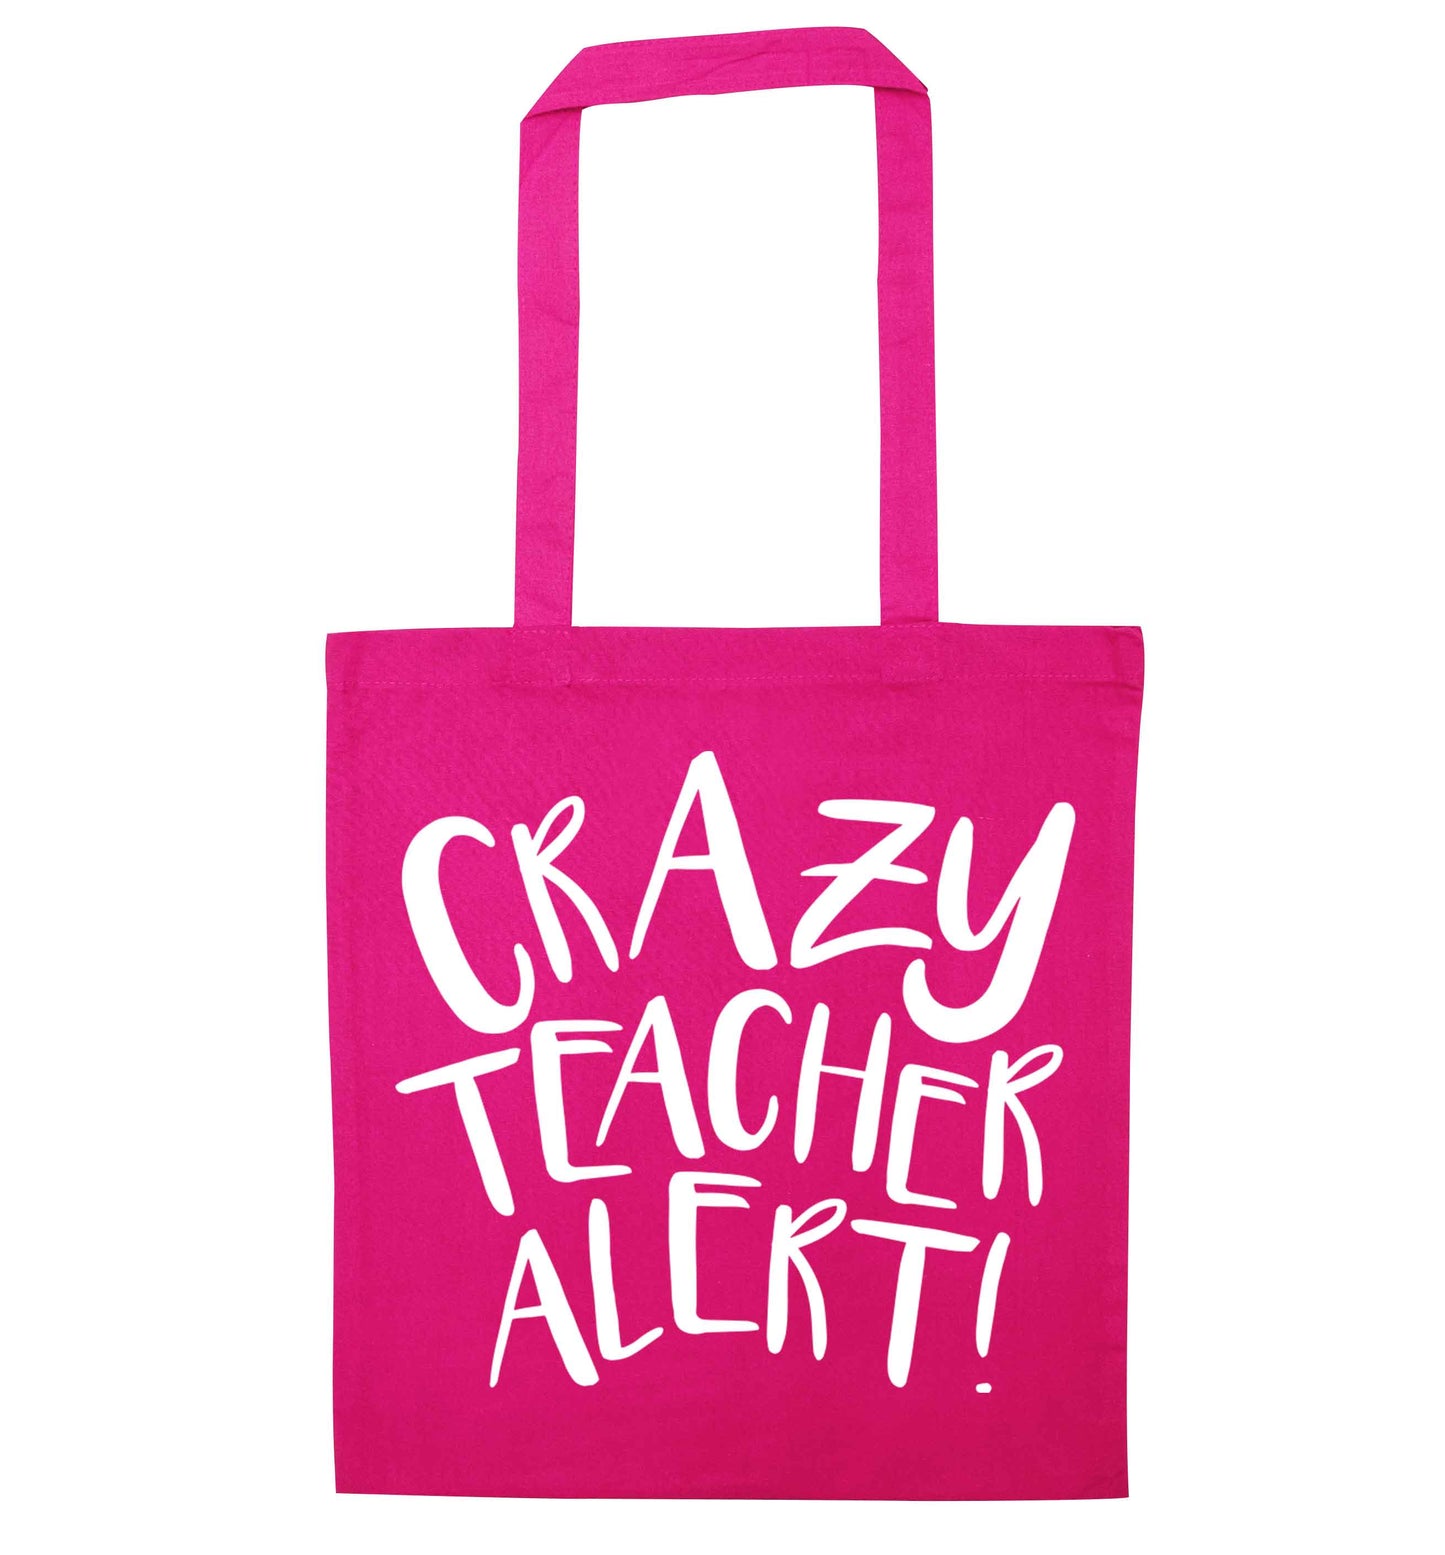 Crazy teacher alert pink tote bag